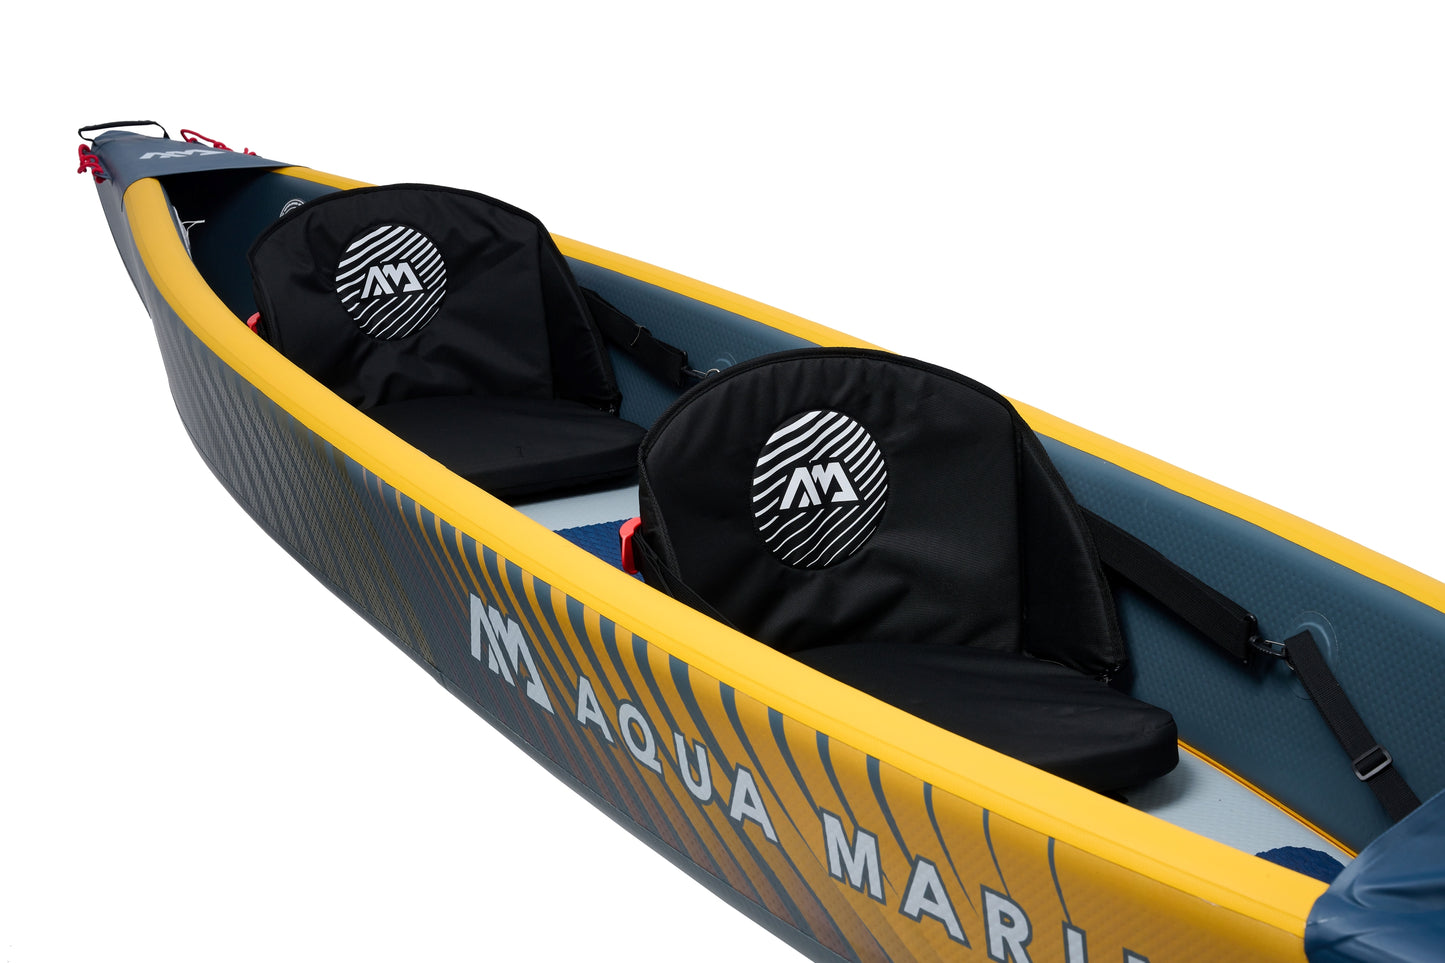 Aqua Marina Tomahawk AIR-K 440 High Pressure Speed Kayak 2-person